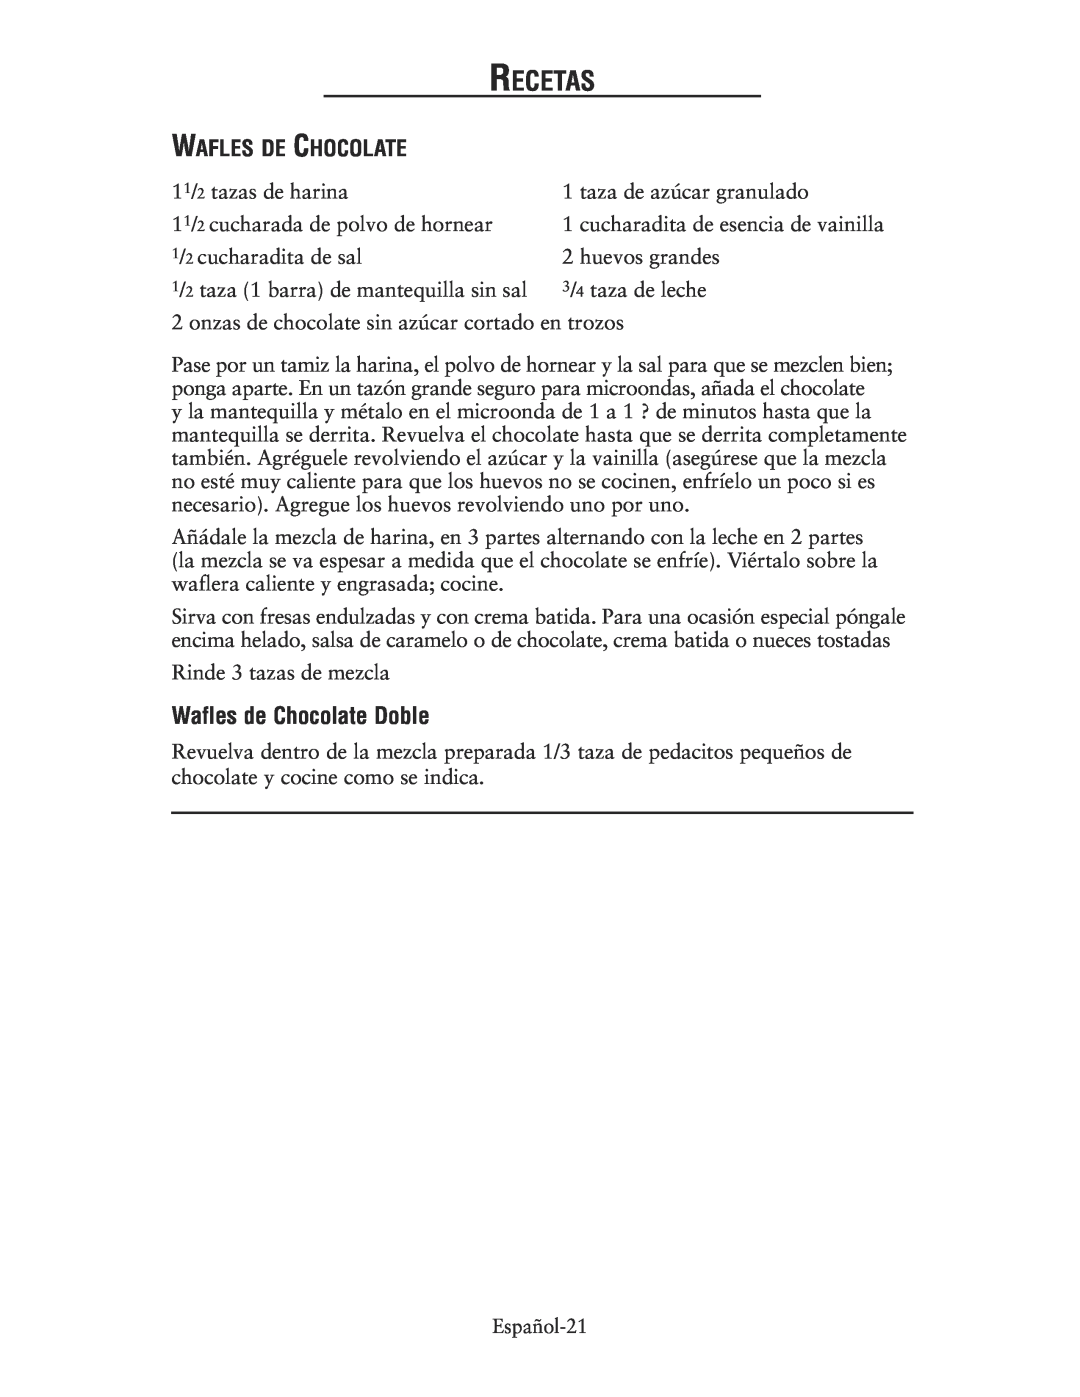 Oster 135018, CKSTWFBF10 user manual Wafles de Chocolate Doble, Wafles De Chocolate, Recetas 